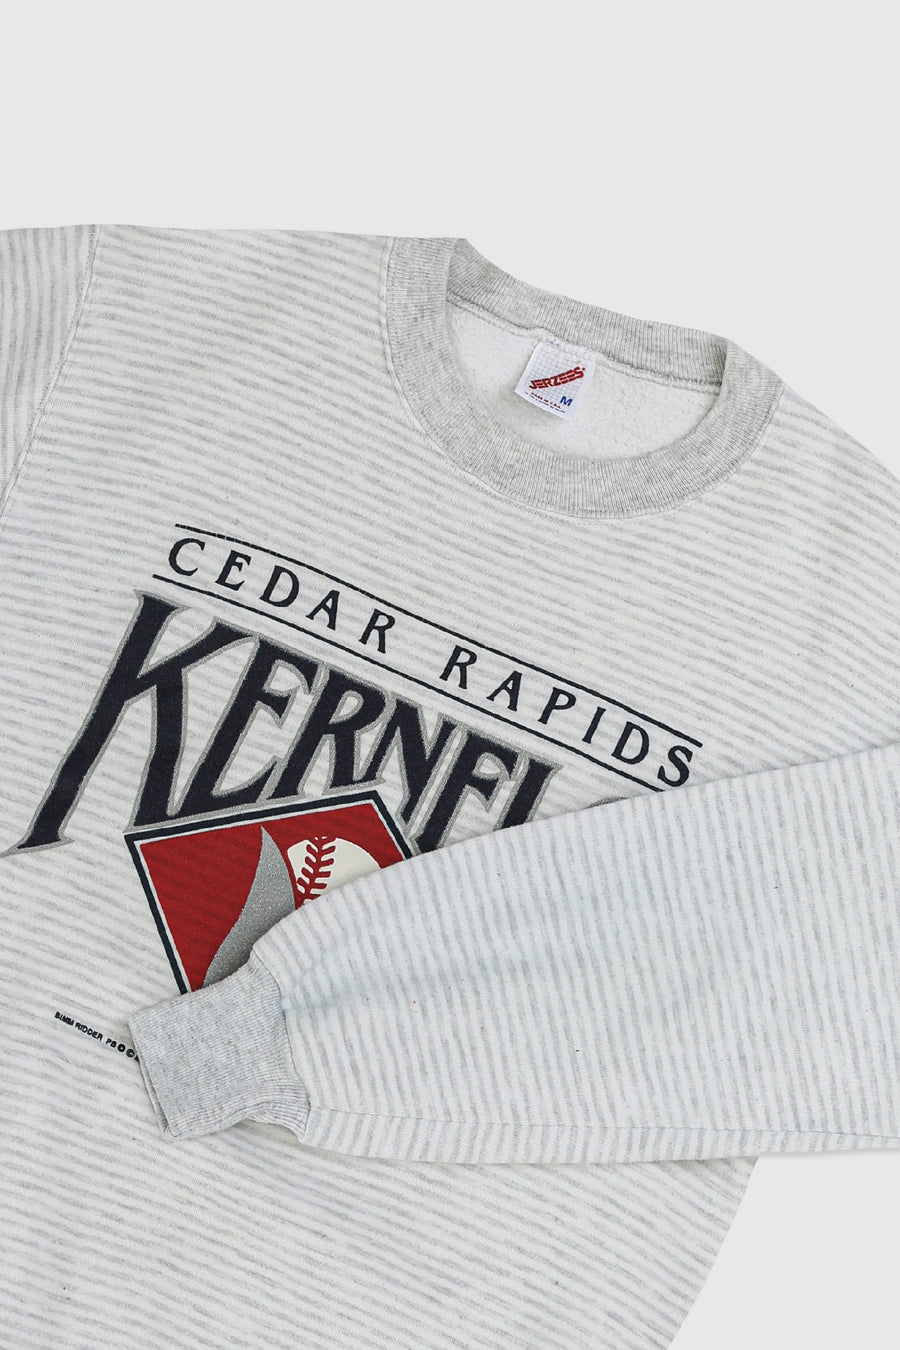 Vintage Cedar Rapids Sweatshirt